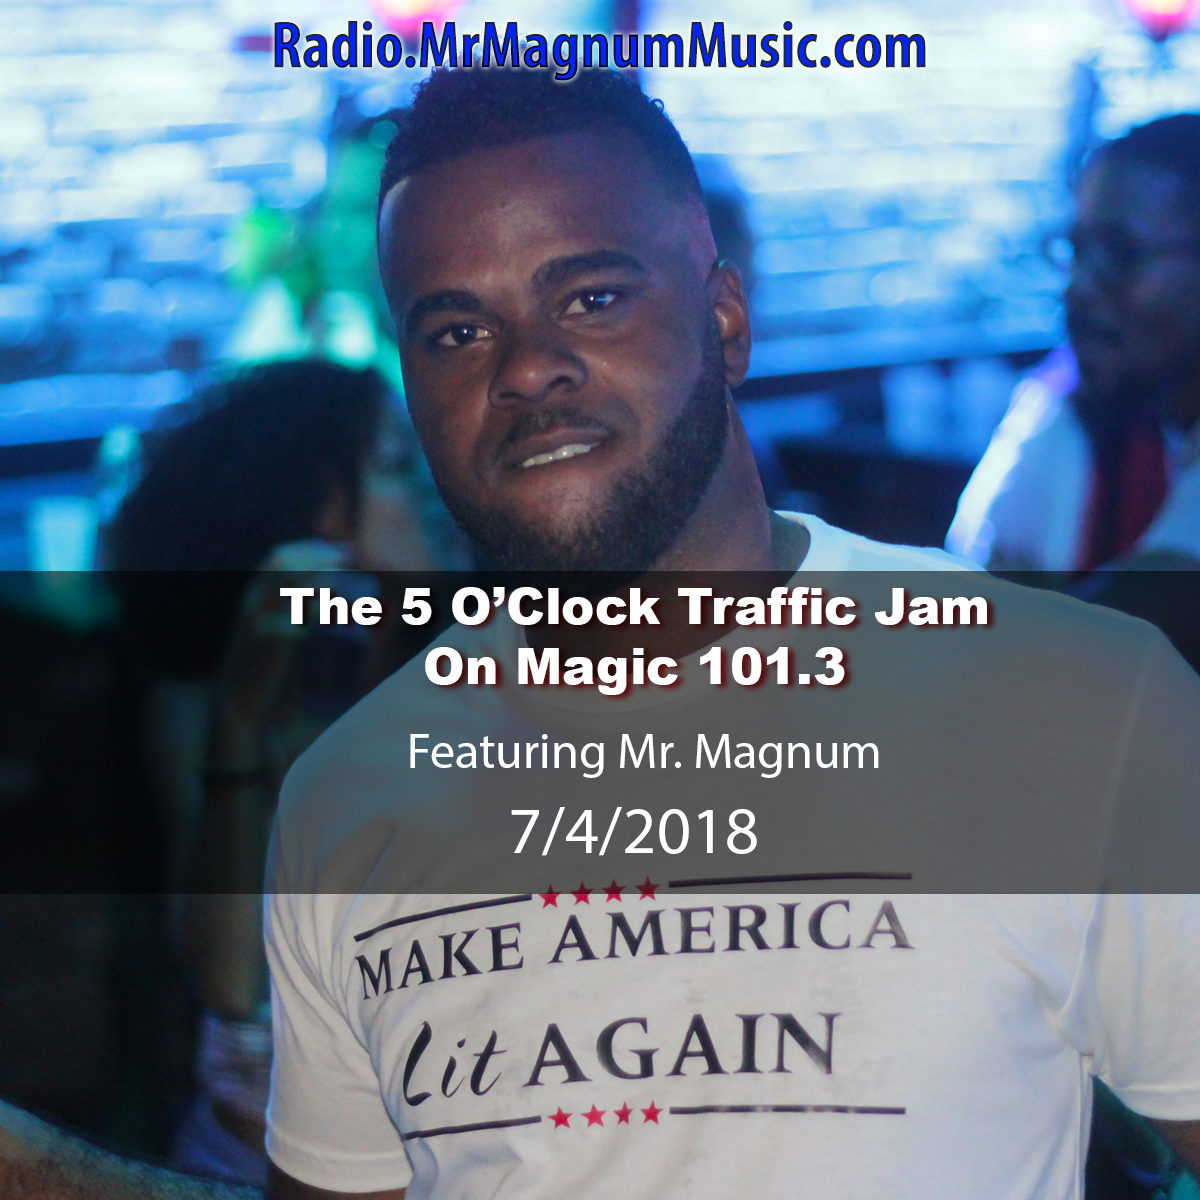 The 5 O'Clock Traffic Jam 20180704 featuring Gainesville's #1 DJ, Mr. Magnum on Magic 101.3